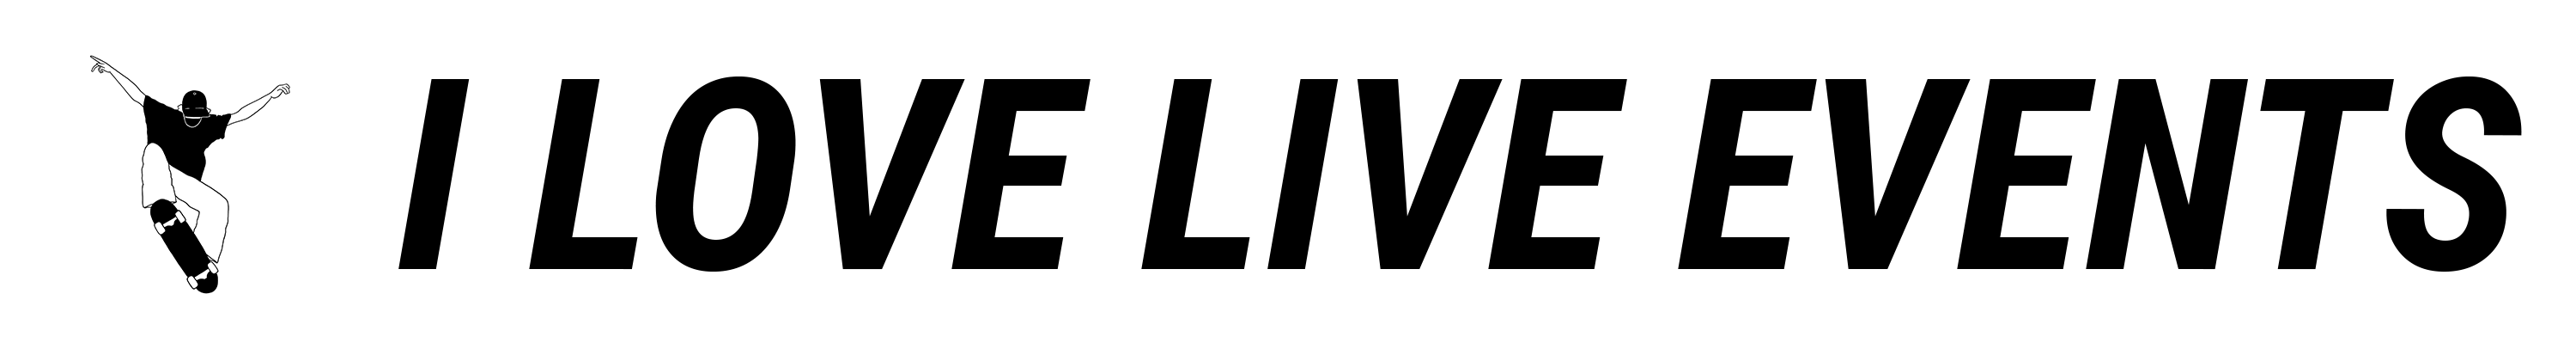 I Love Live Events Logo